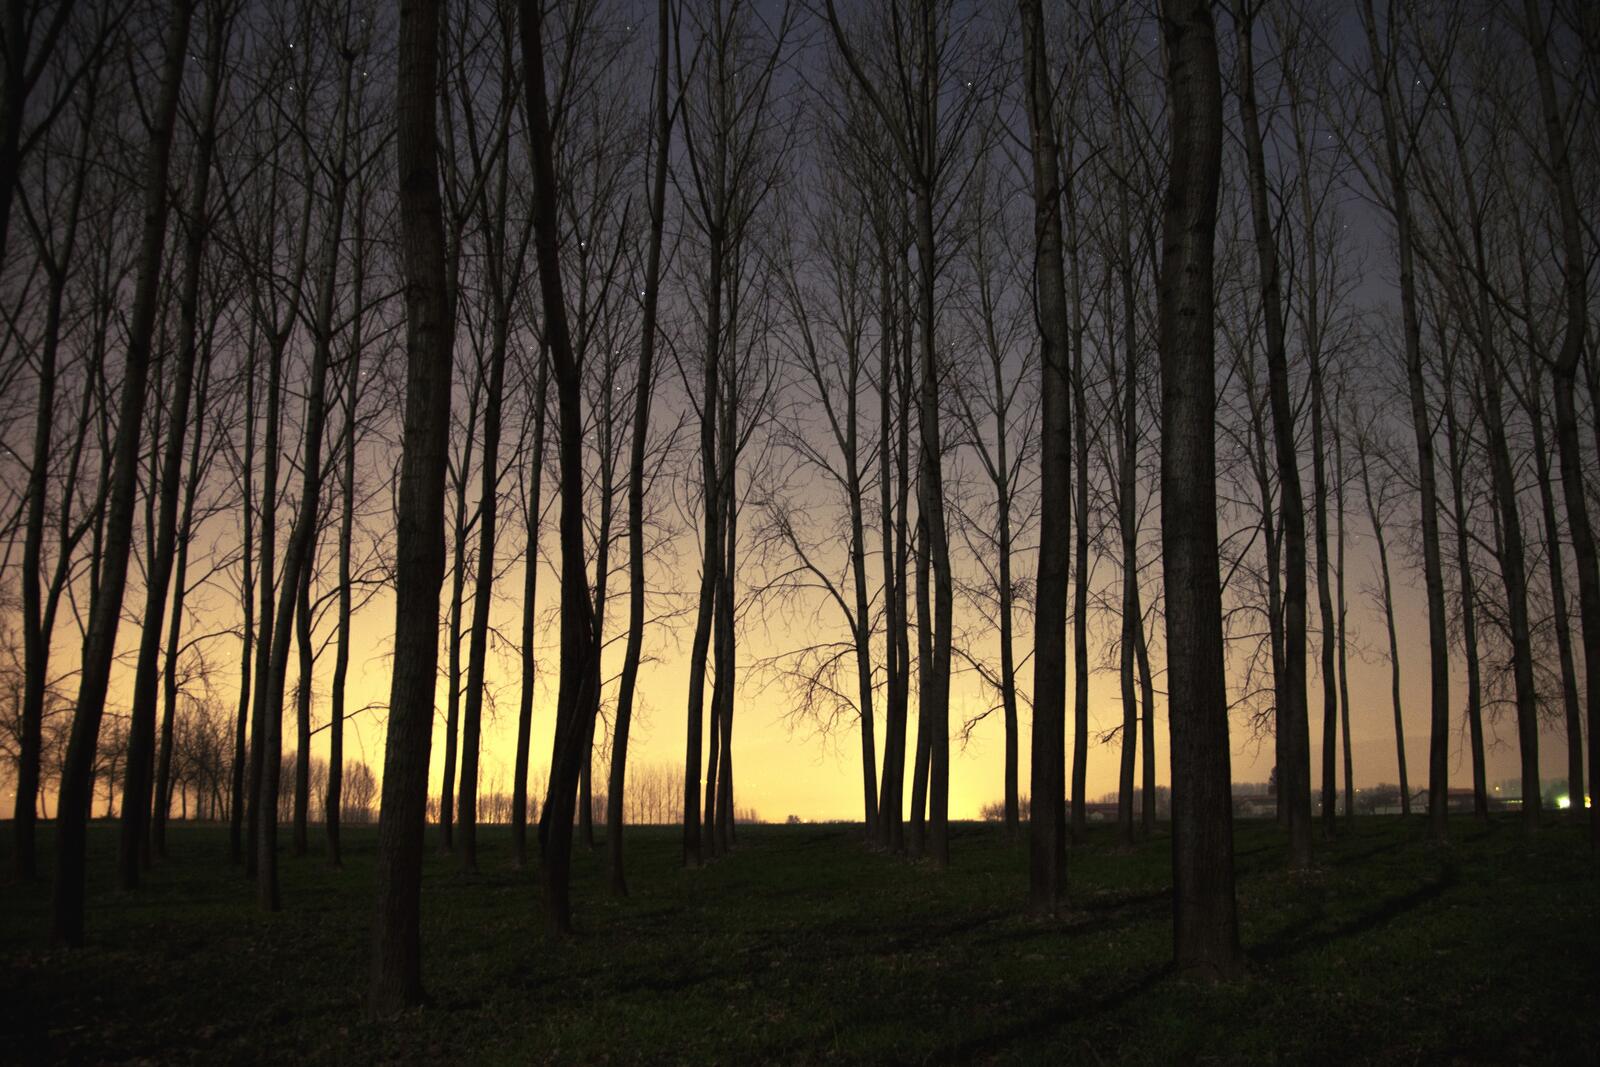 Sleeping fall trees at sunset